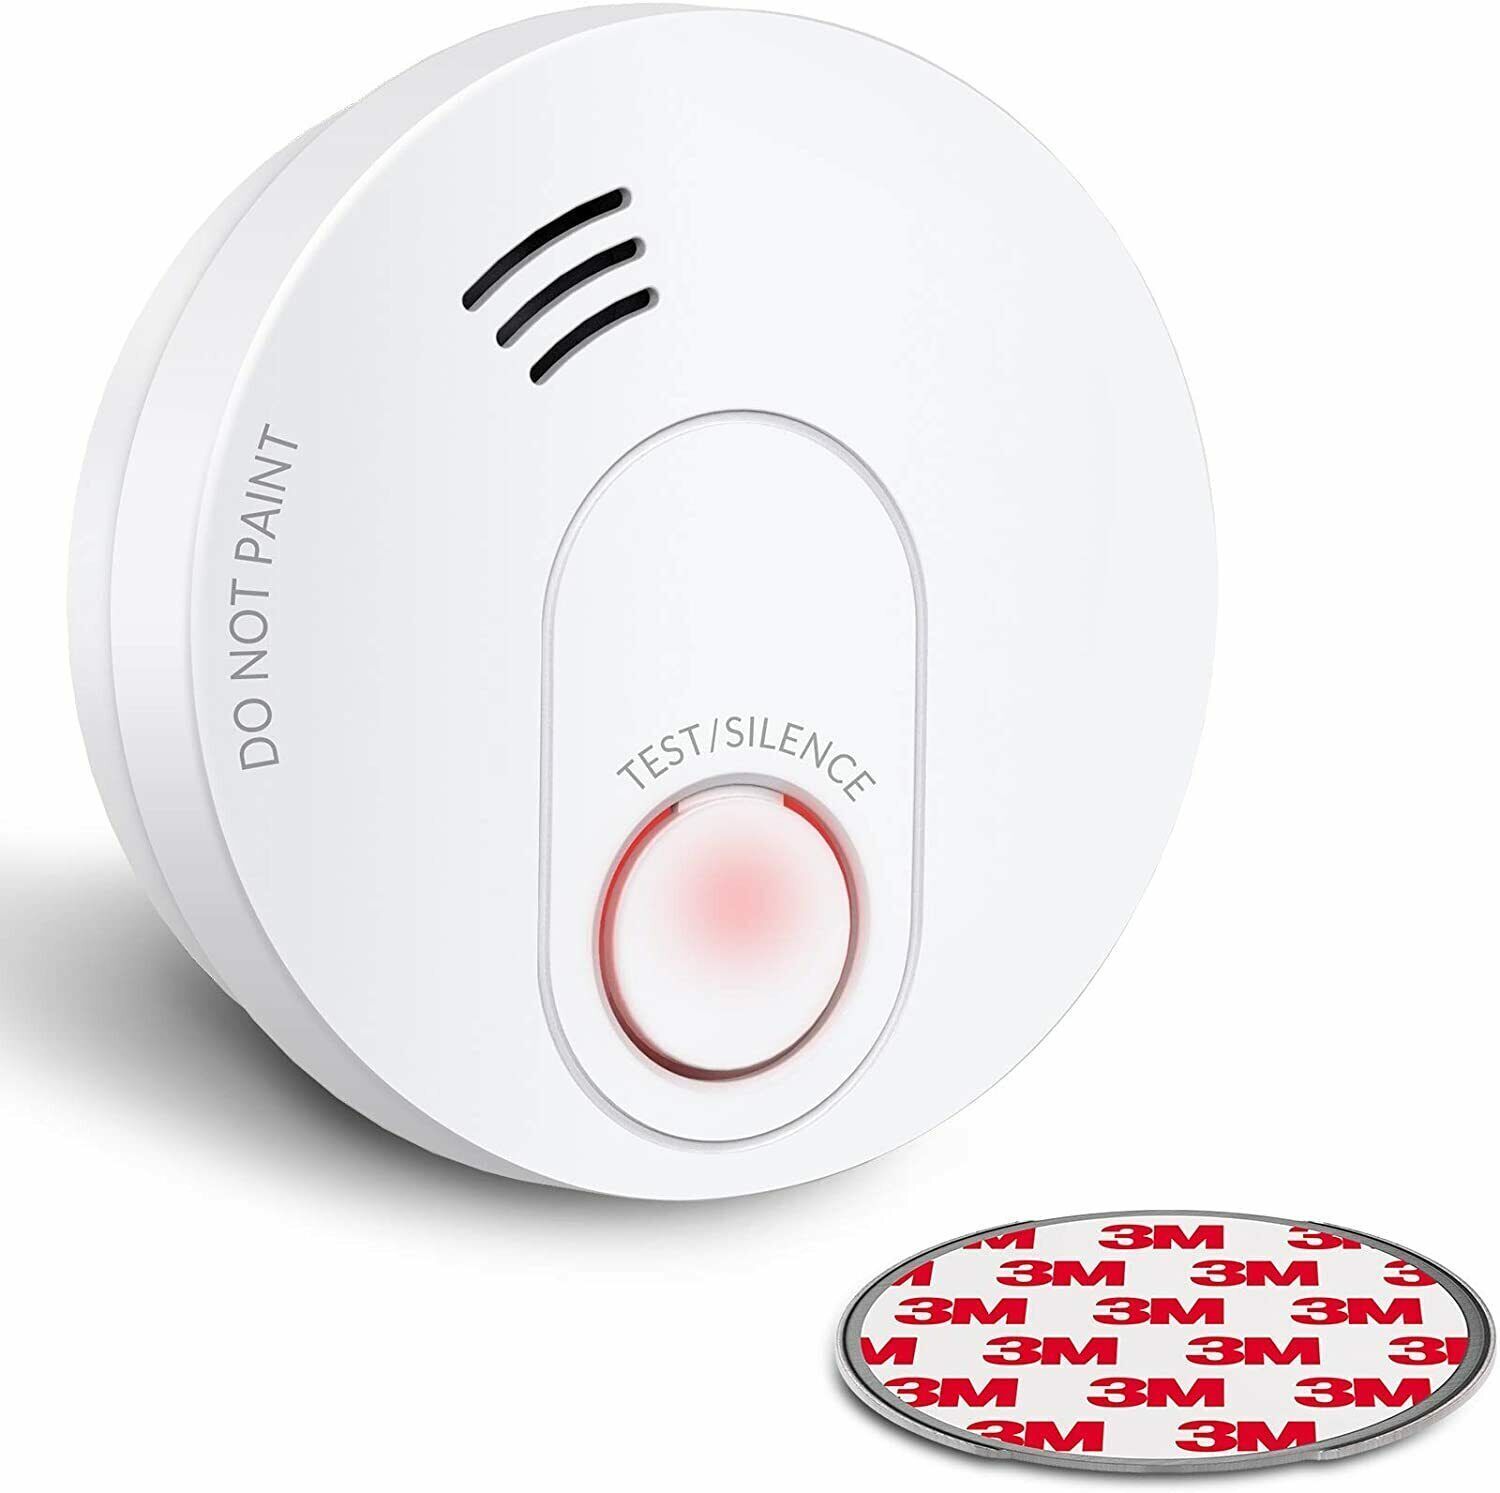 NEW Arrival SITERWELL Smoke Detector 10-Year Smoke Alarm UL Listed 